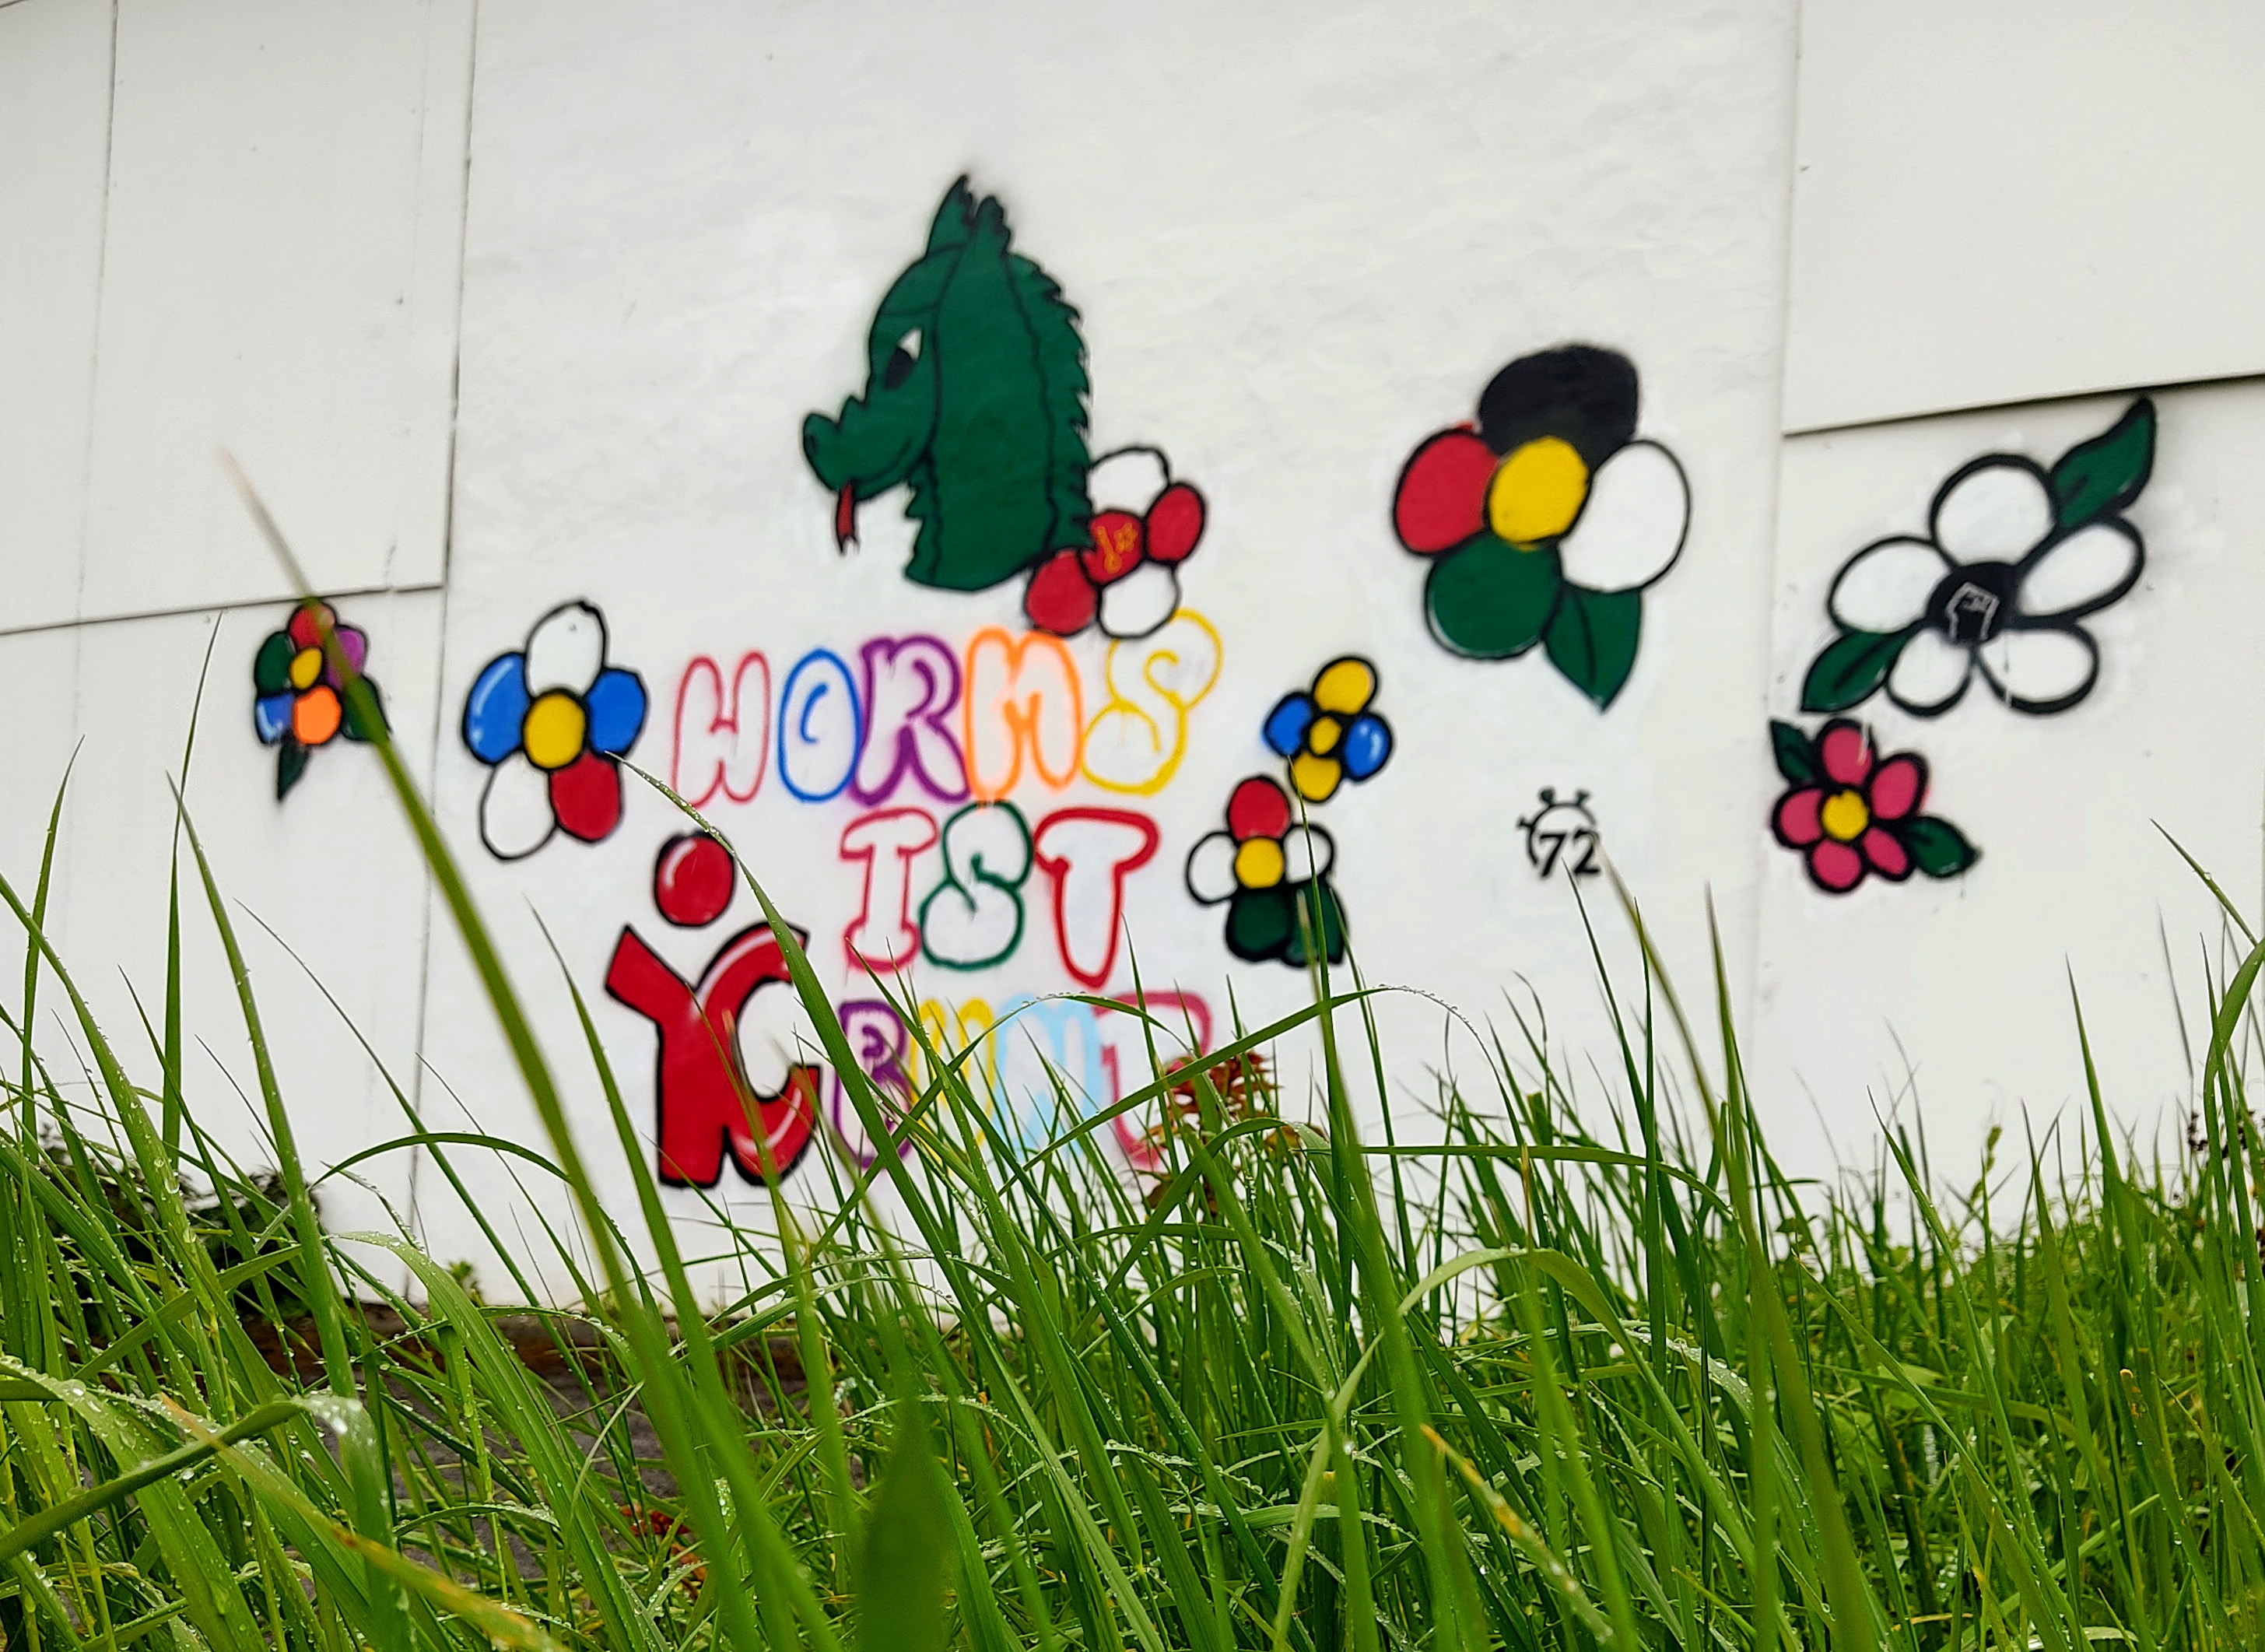 Graffiti mit "Worms ist bunt" (Caritasverband Worms e.V.)